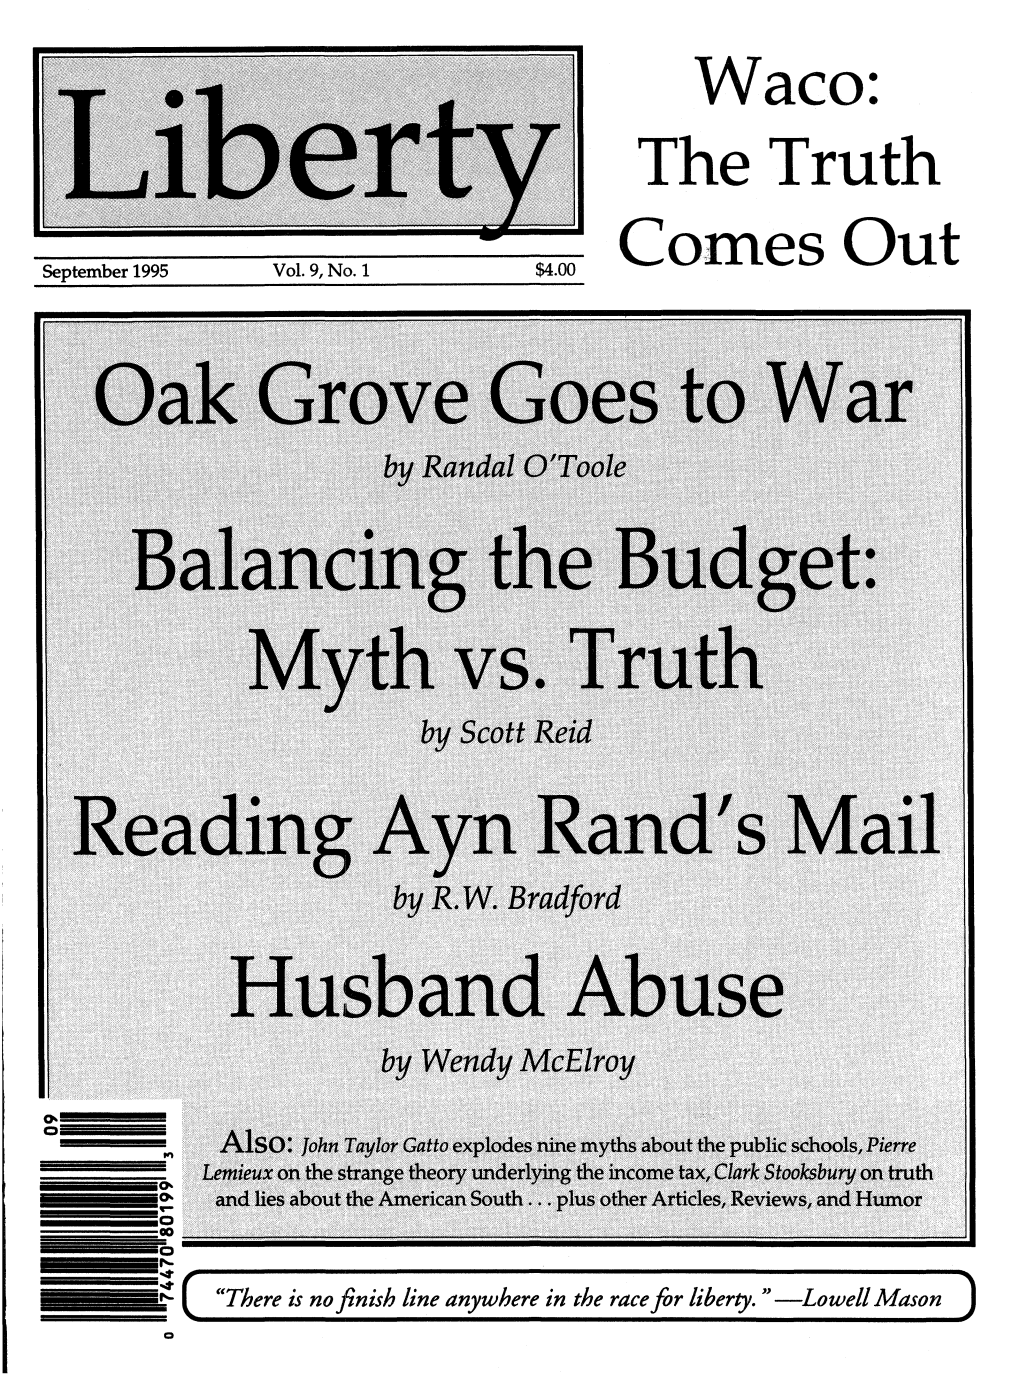 Liberty Magazine September 1